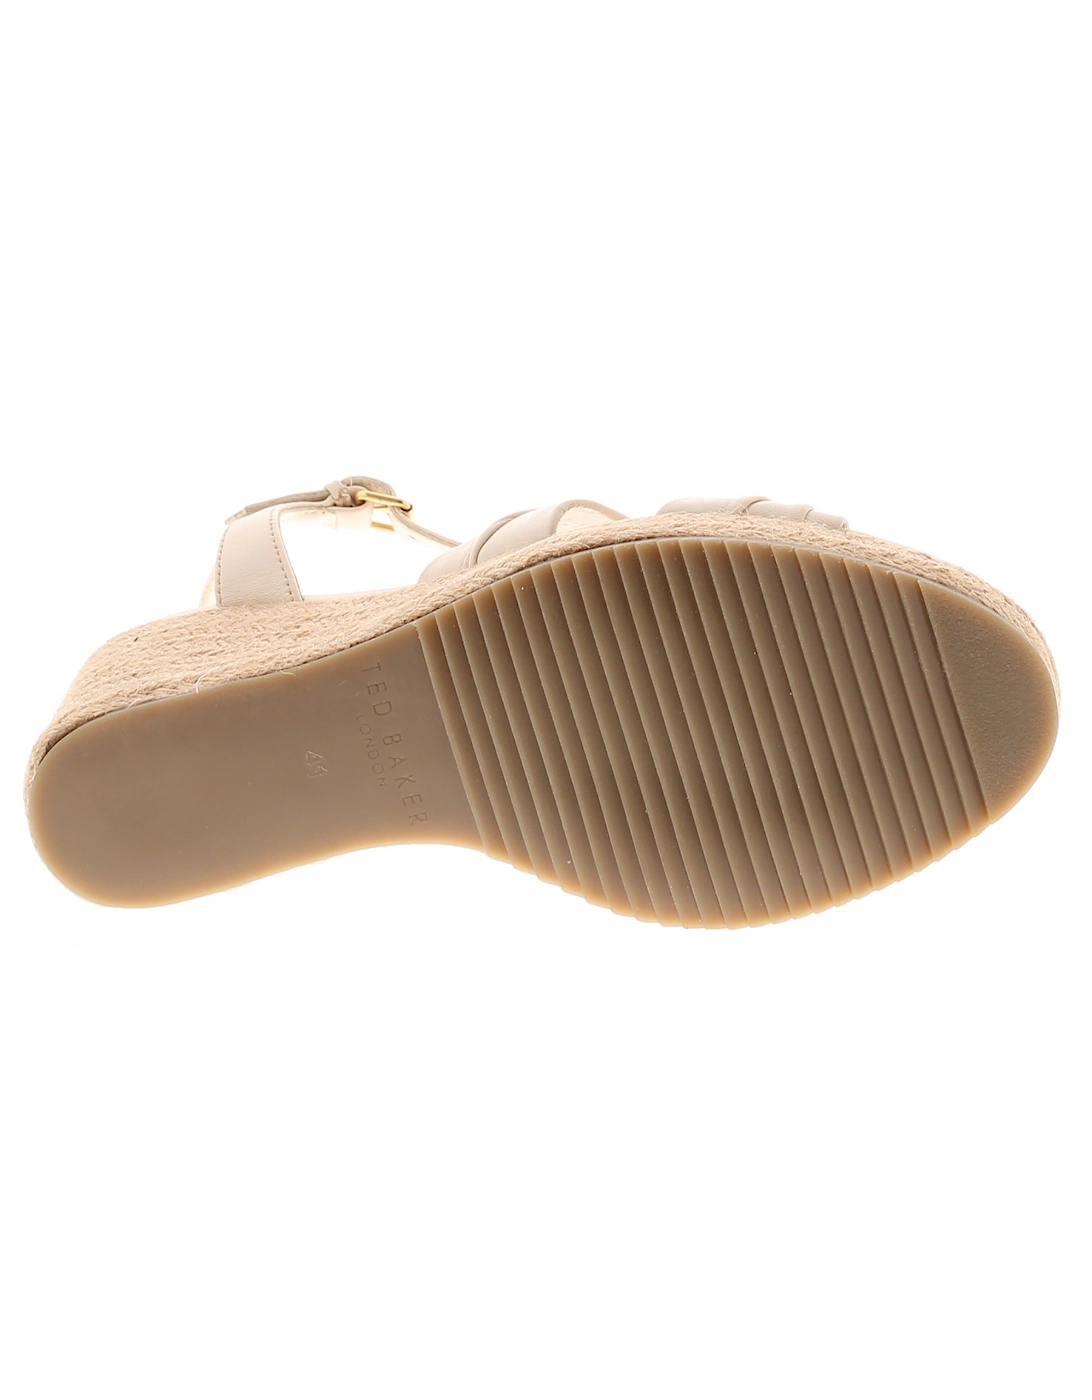 Womens Sandals Carda Espadrille Wedge Leather Beige UK Size